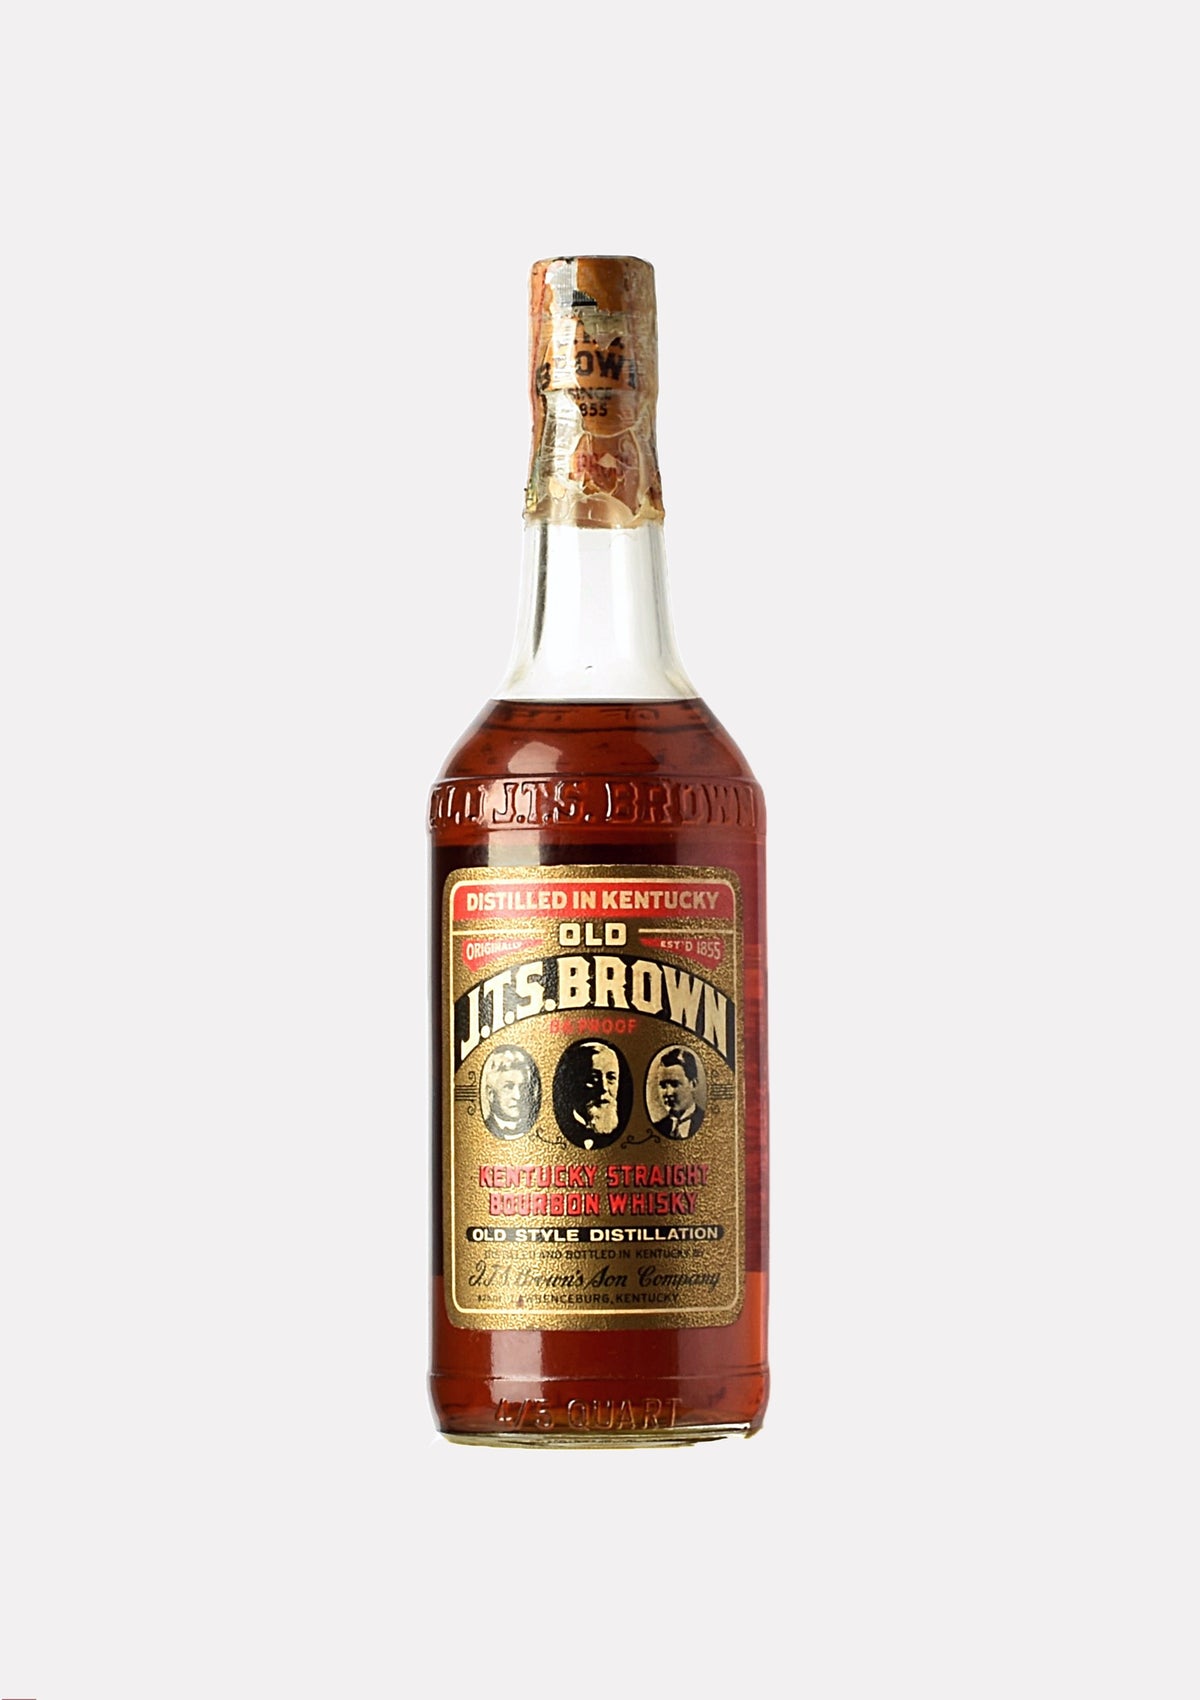 J.T.S. Brown Kentucky Straight Bourbon Whiskey Old Style Destillation 4 Jahre